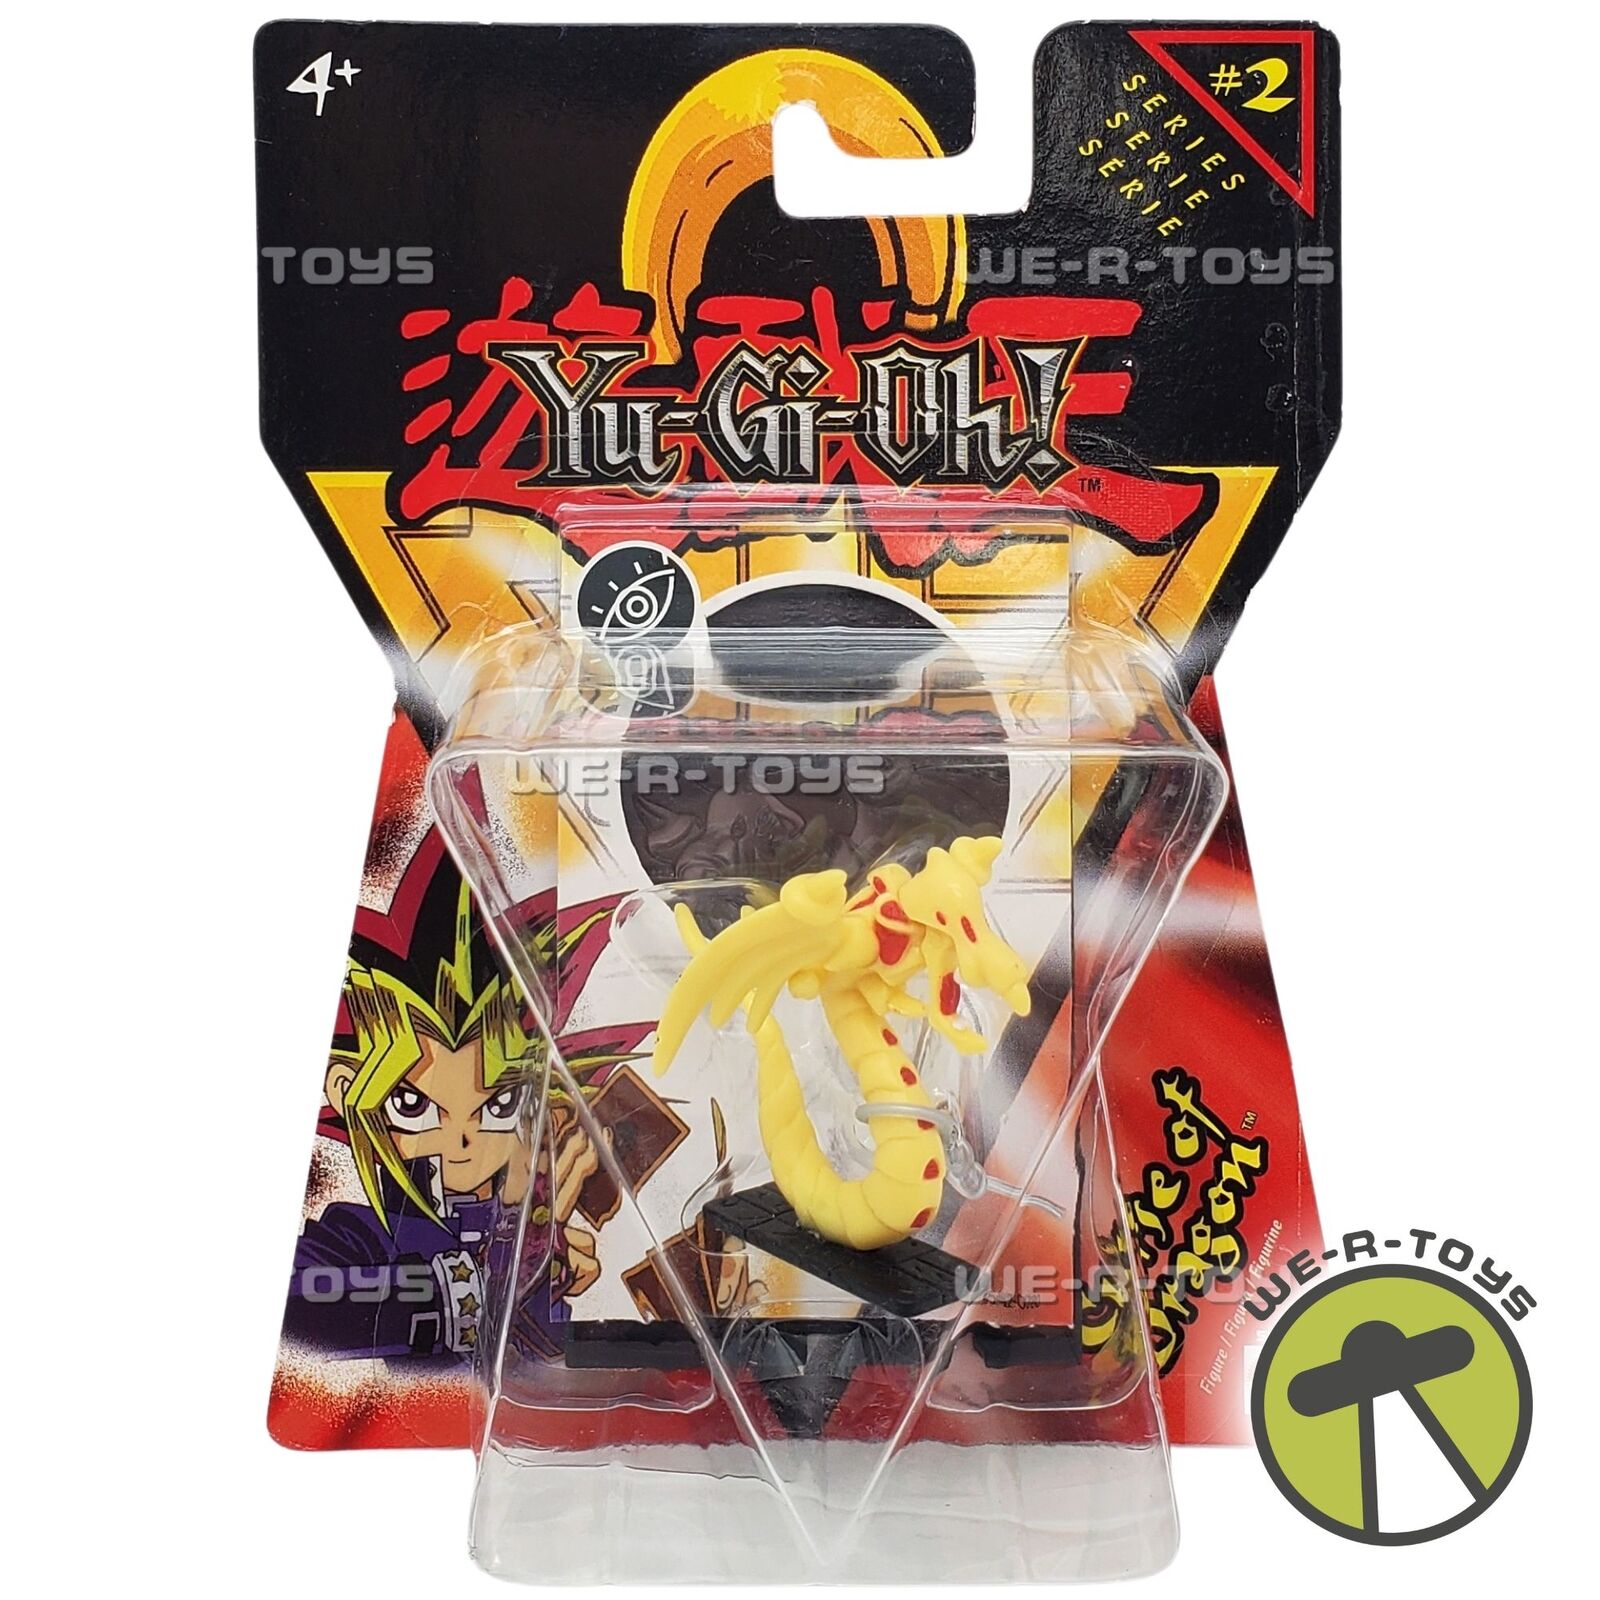 Yu-Gi-Oh Curse of Dragon Figure With Holo-Tile Series #2 Mattel 56546 NRFP